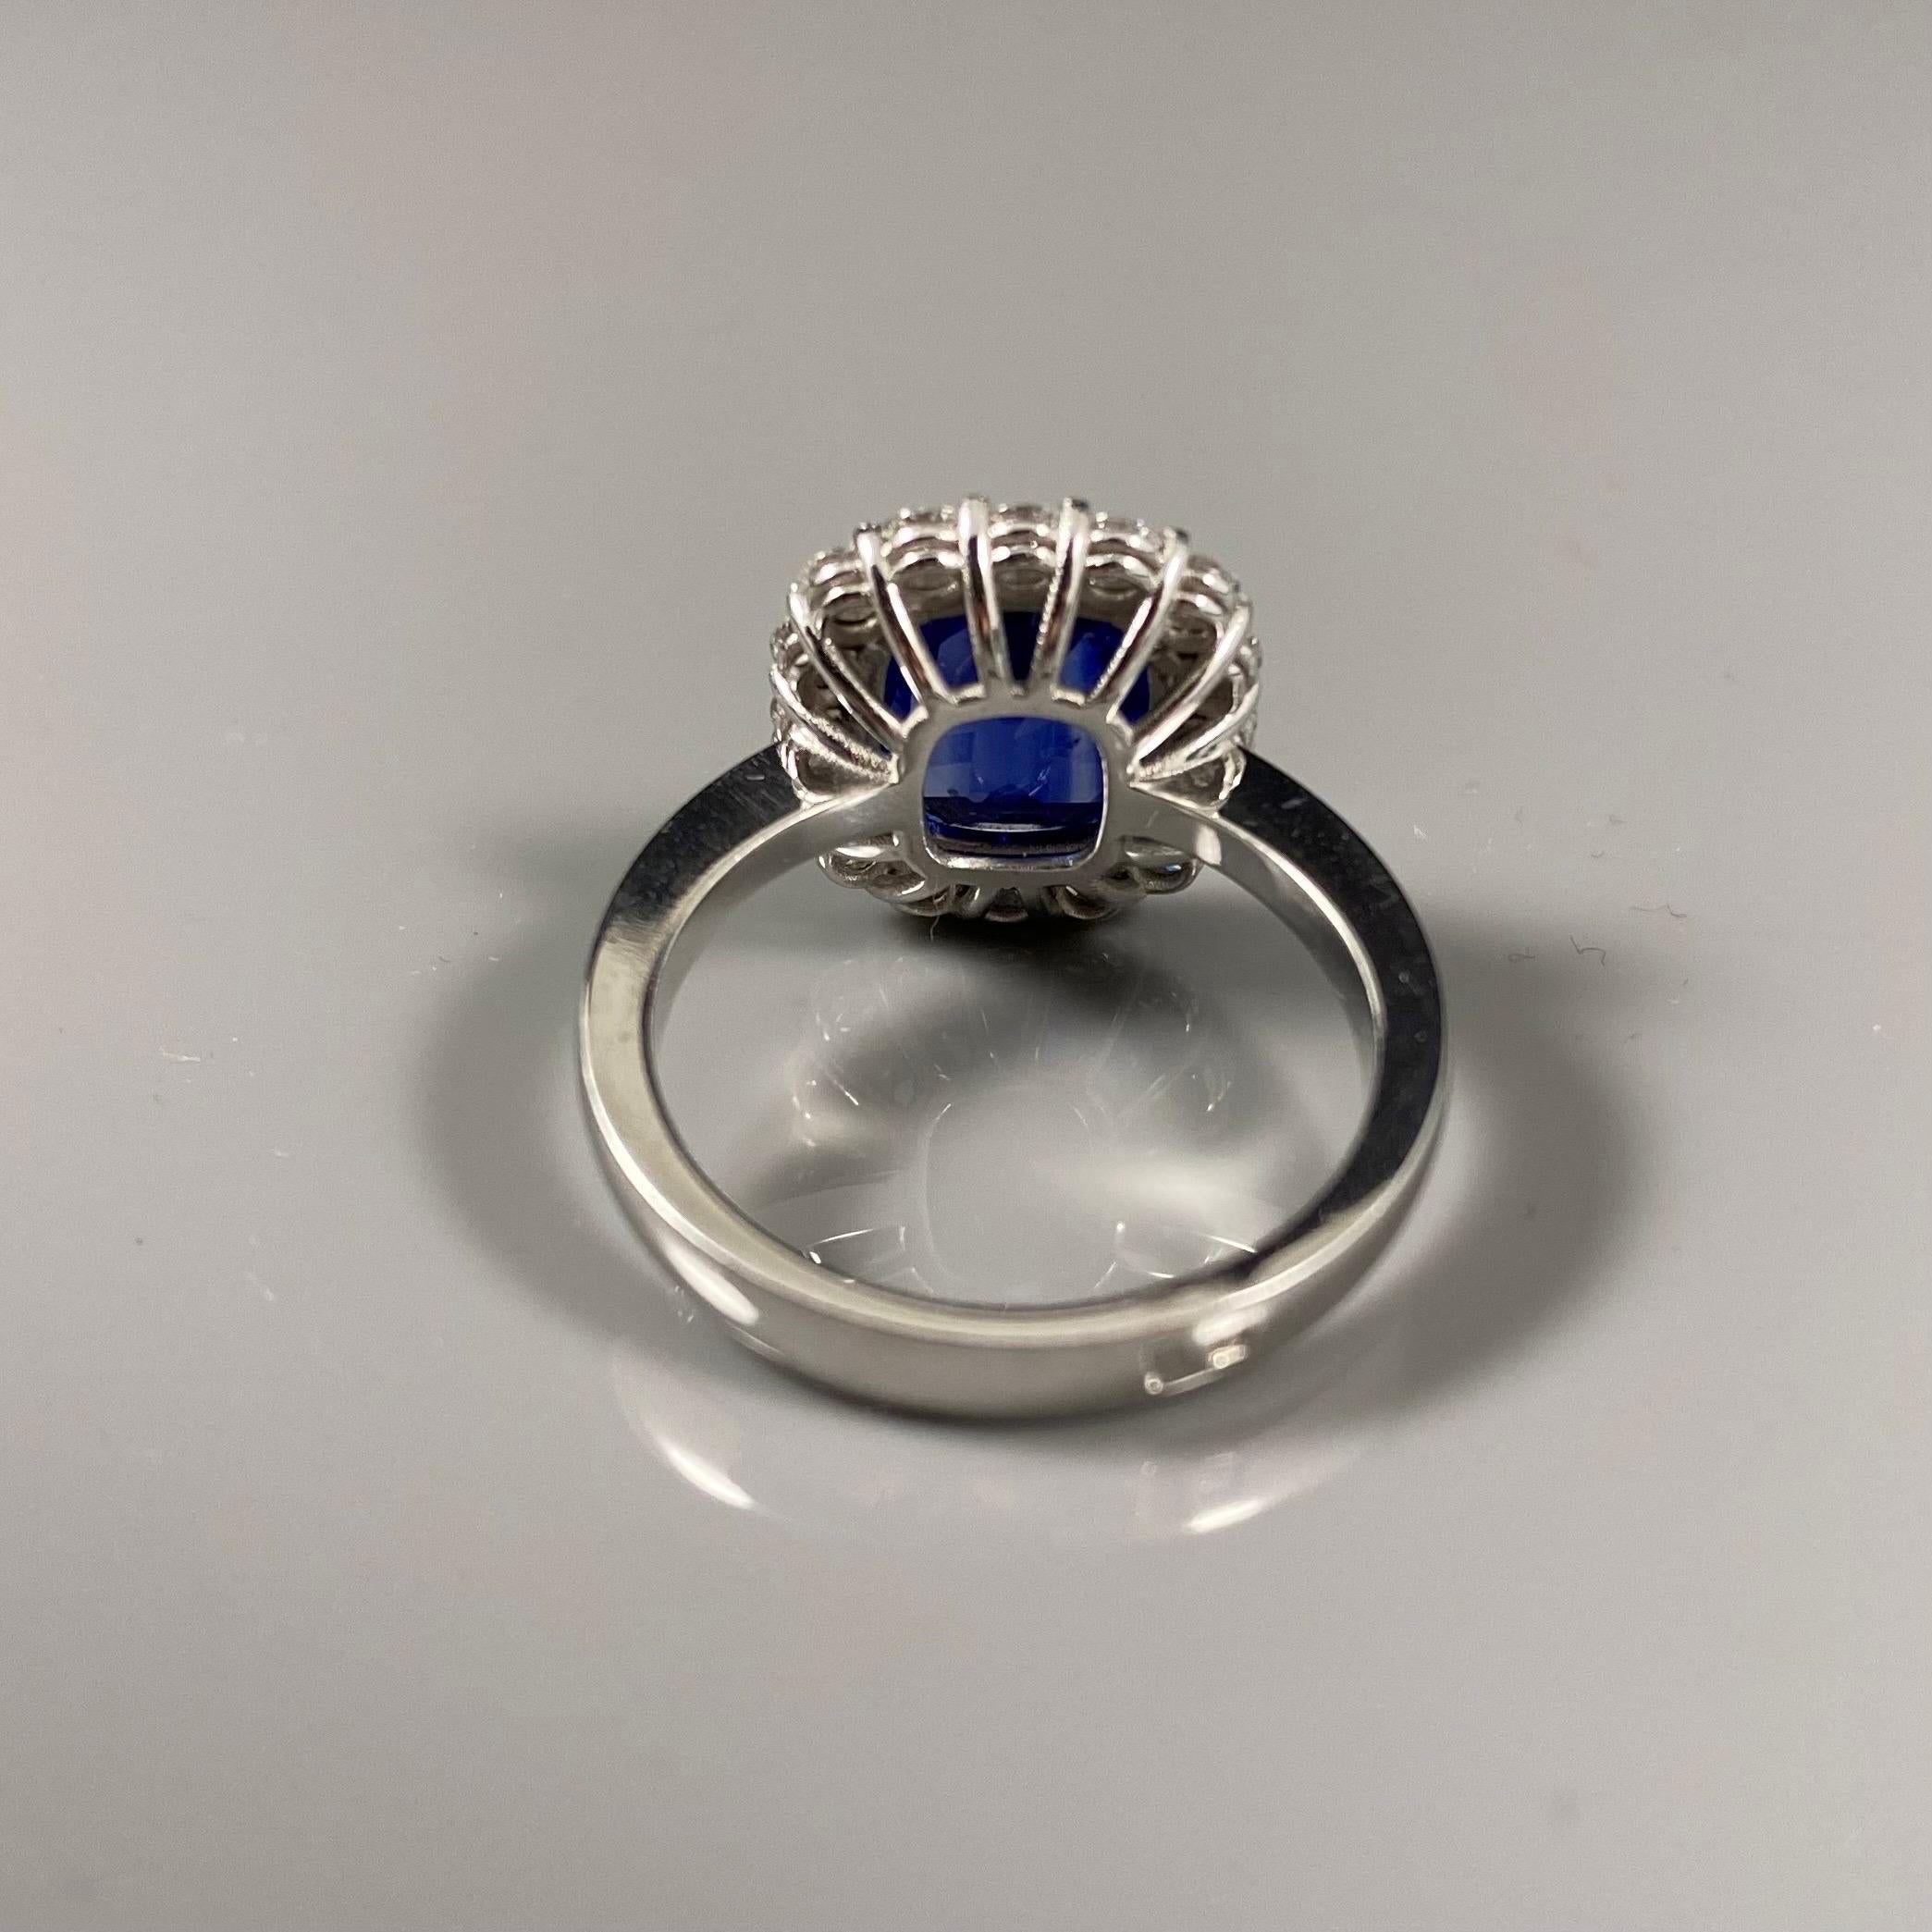 3.1 Carat Cornflower Blue Sapphire Diamond Cluster Engagement Ring White Gold 9